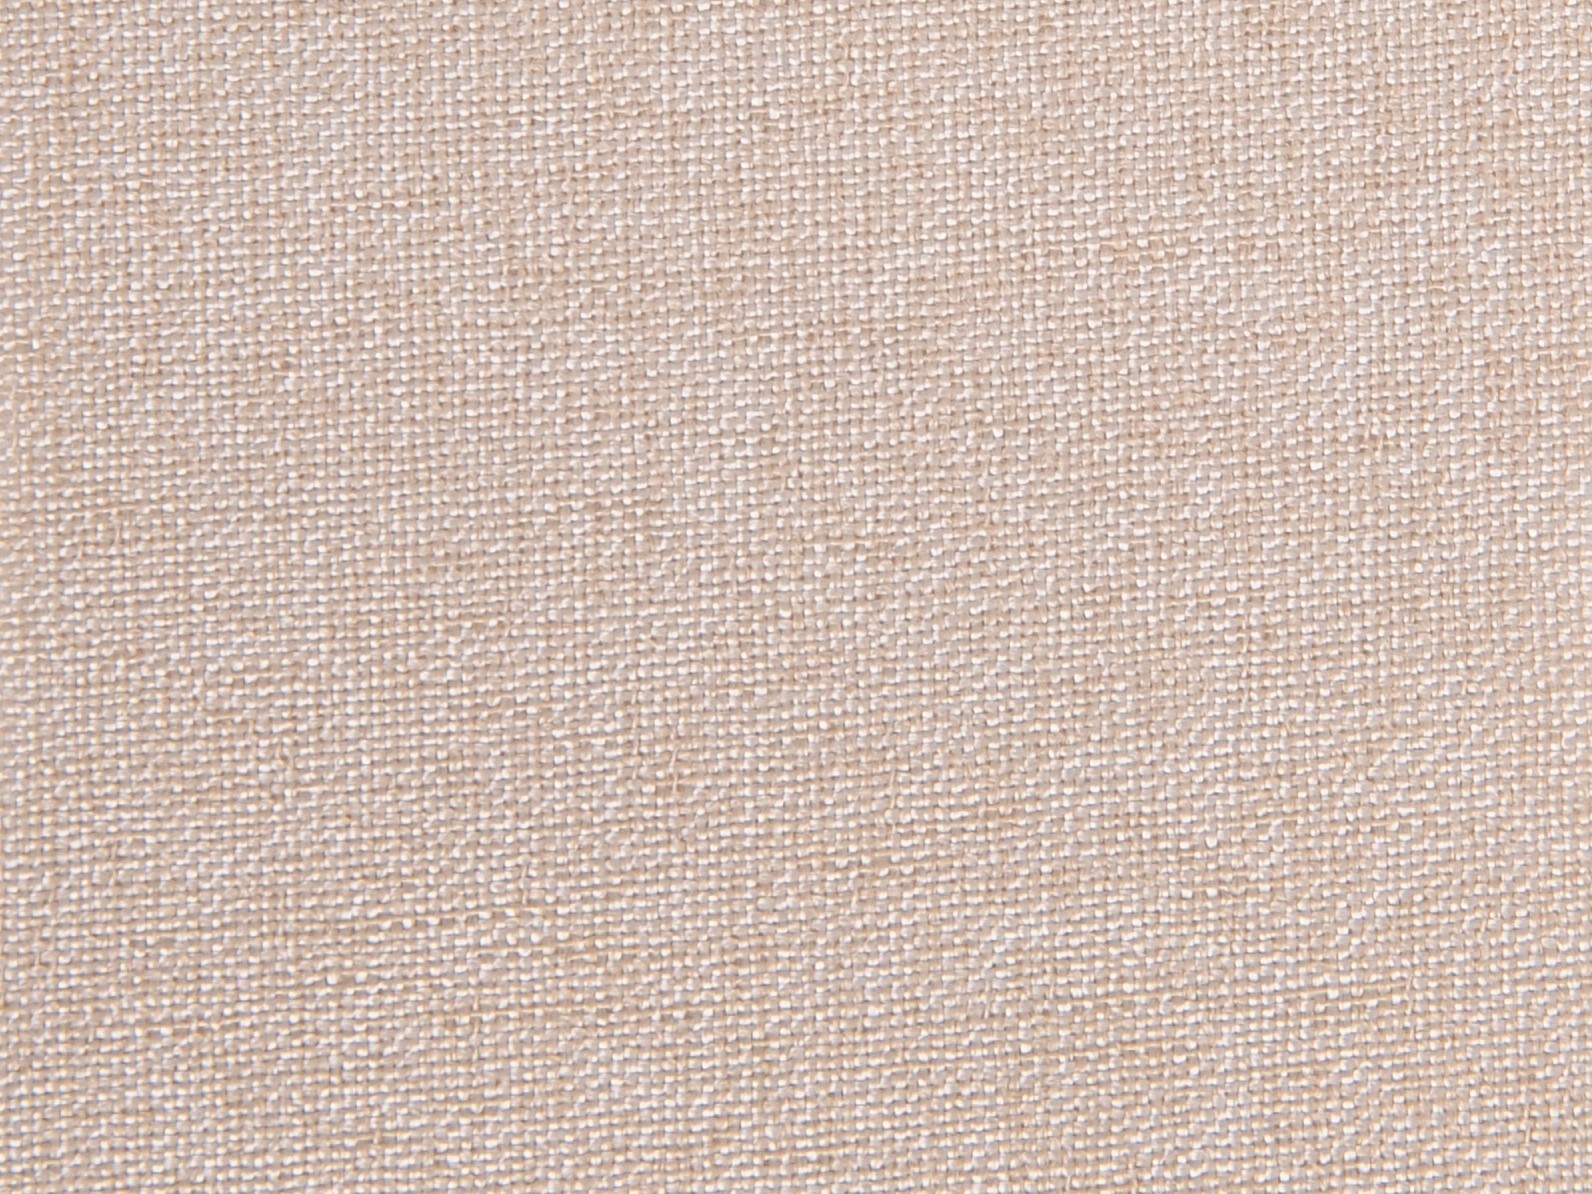 Silver Bej - Albümlük Kumaş - Varan Tekstil Kalitesiyle